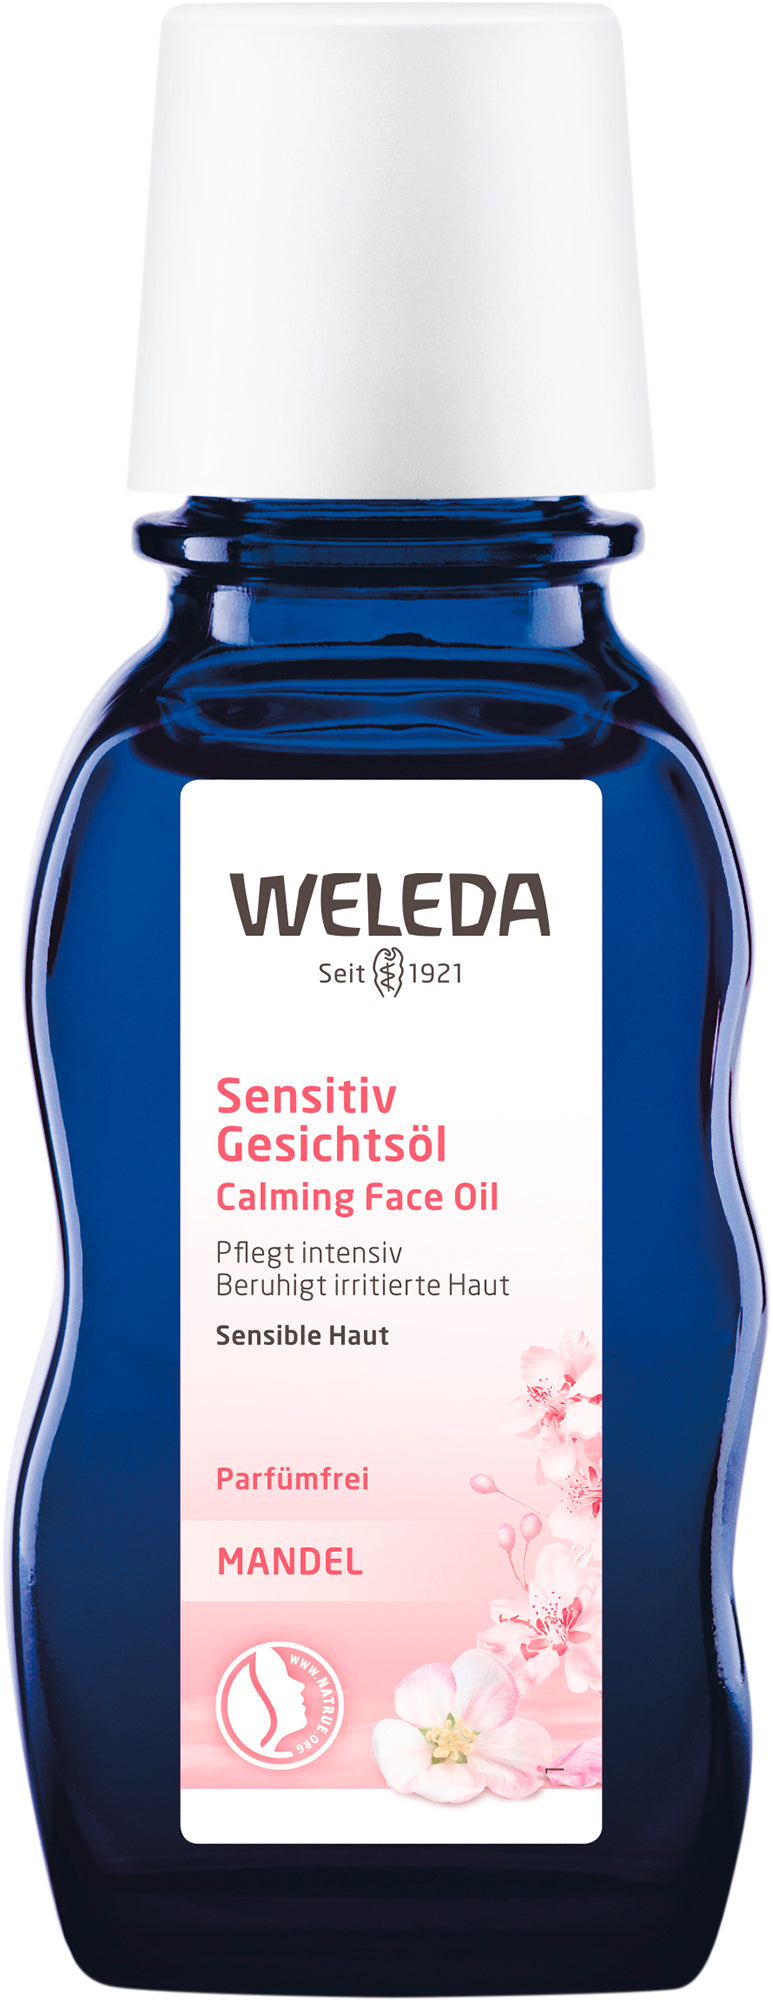 Weleda - Mandel Gesichtsöl 50 ml